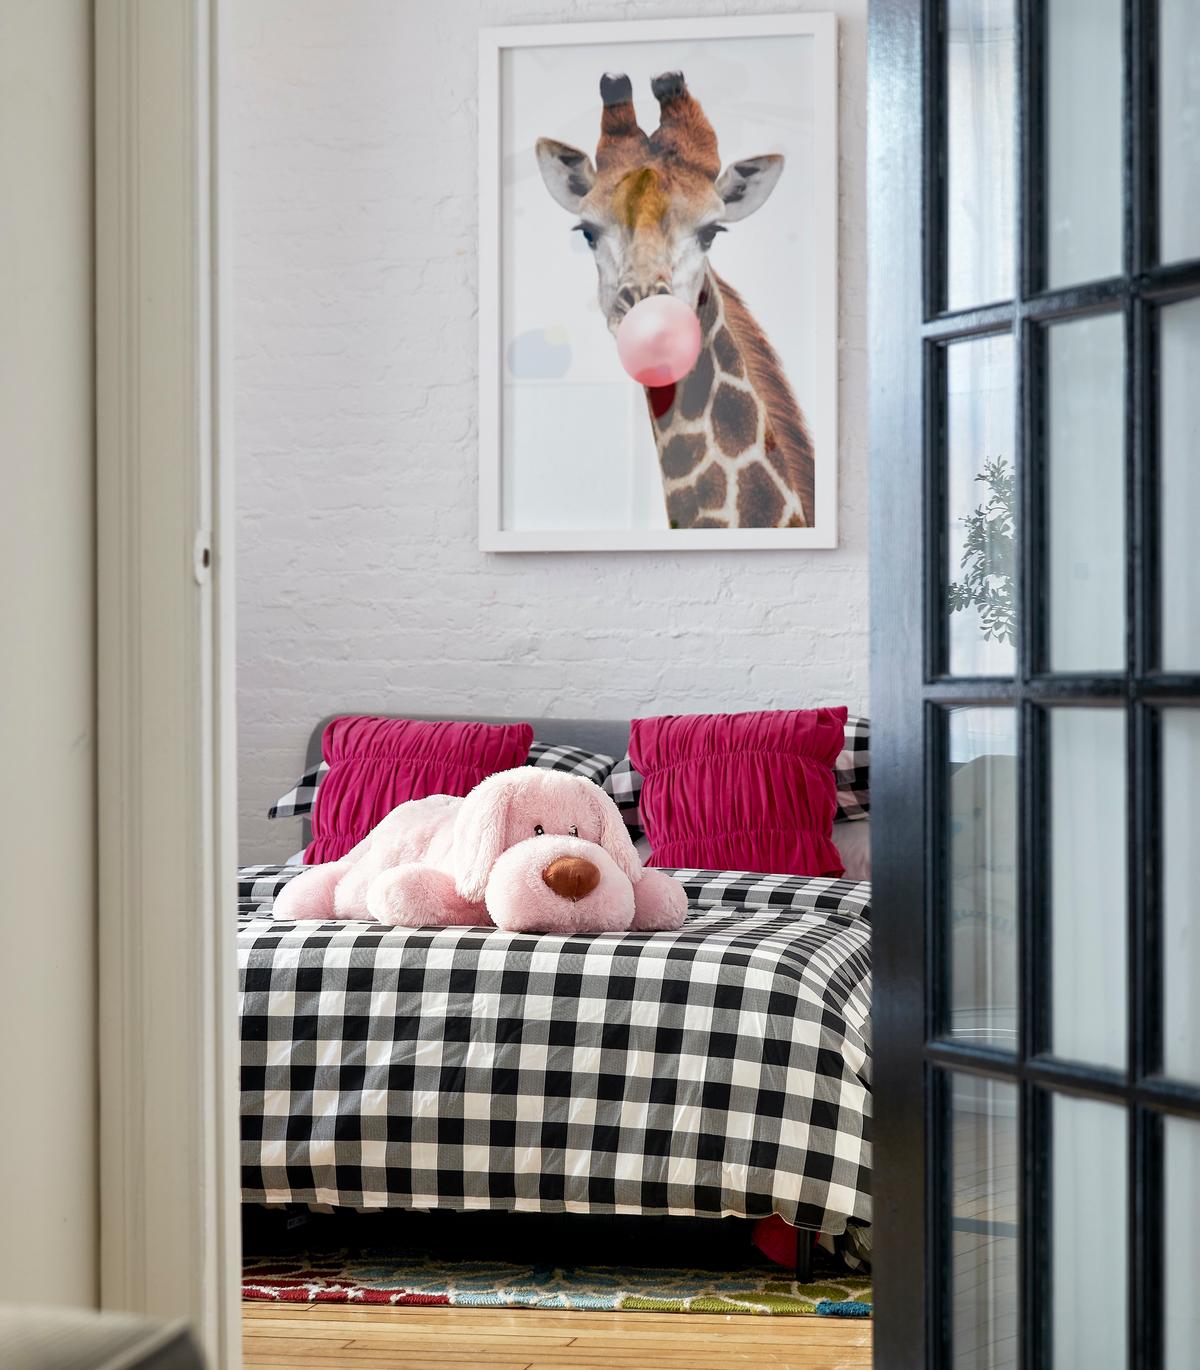 Shades of pink create a fun and festive color scheme in a children's bedroom. (Scott Gabriel Morris/TNS)